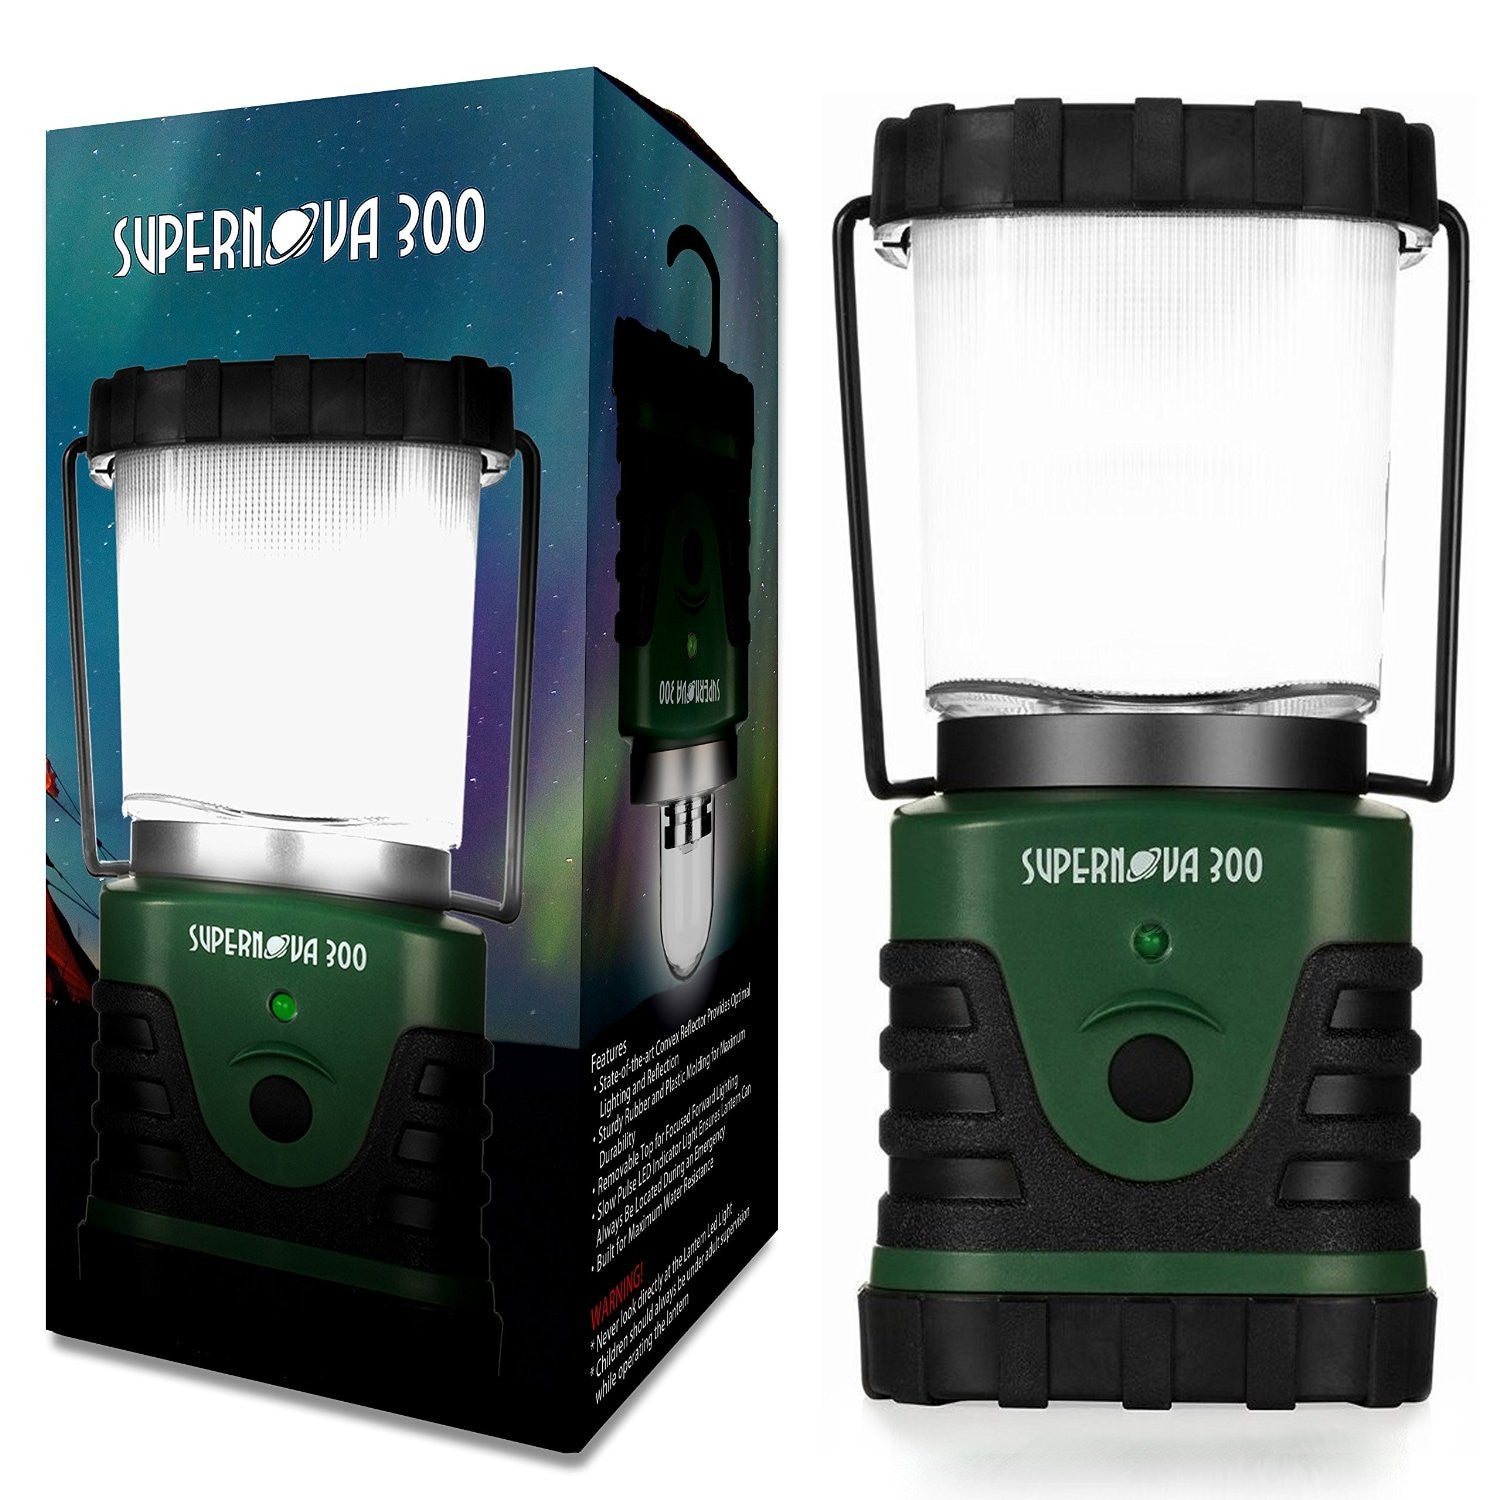 UltraFire Camping Lantern X1